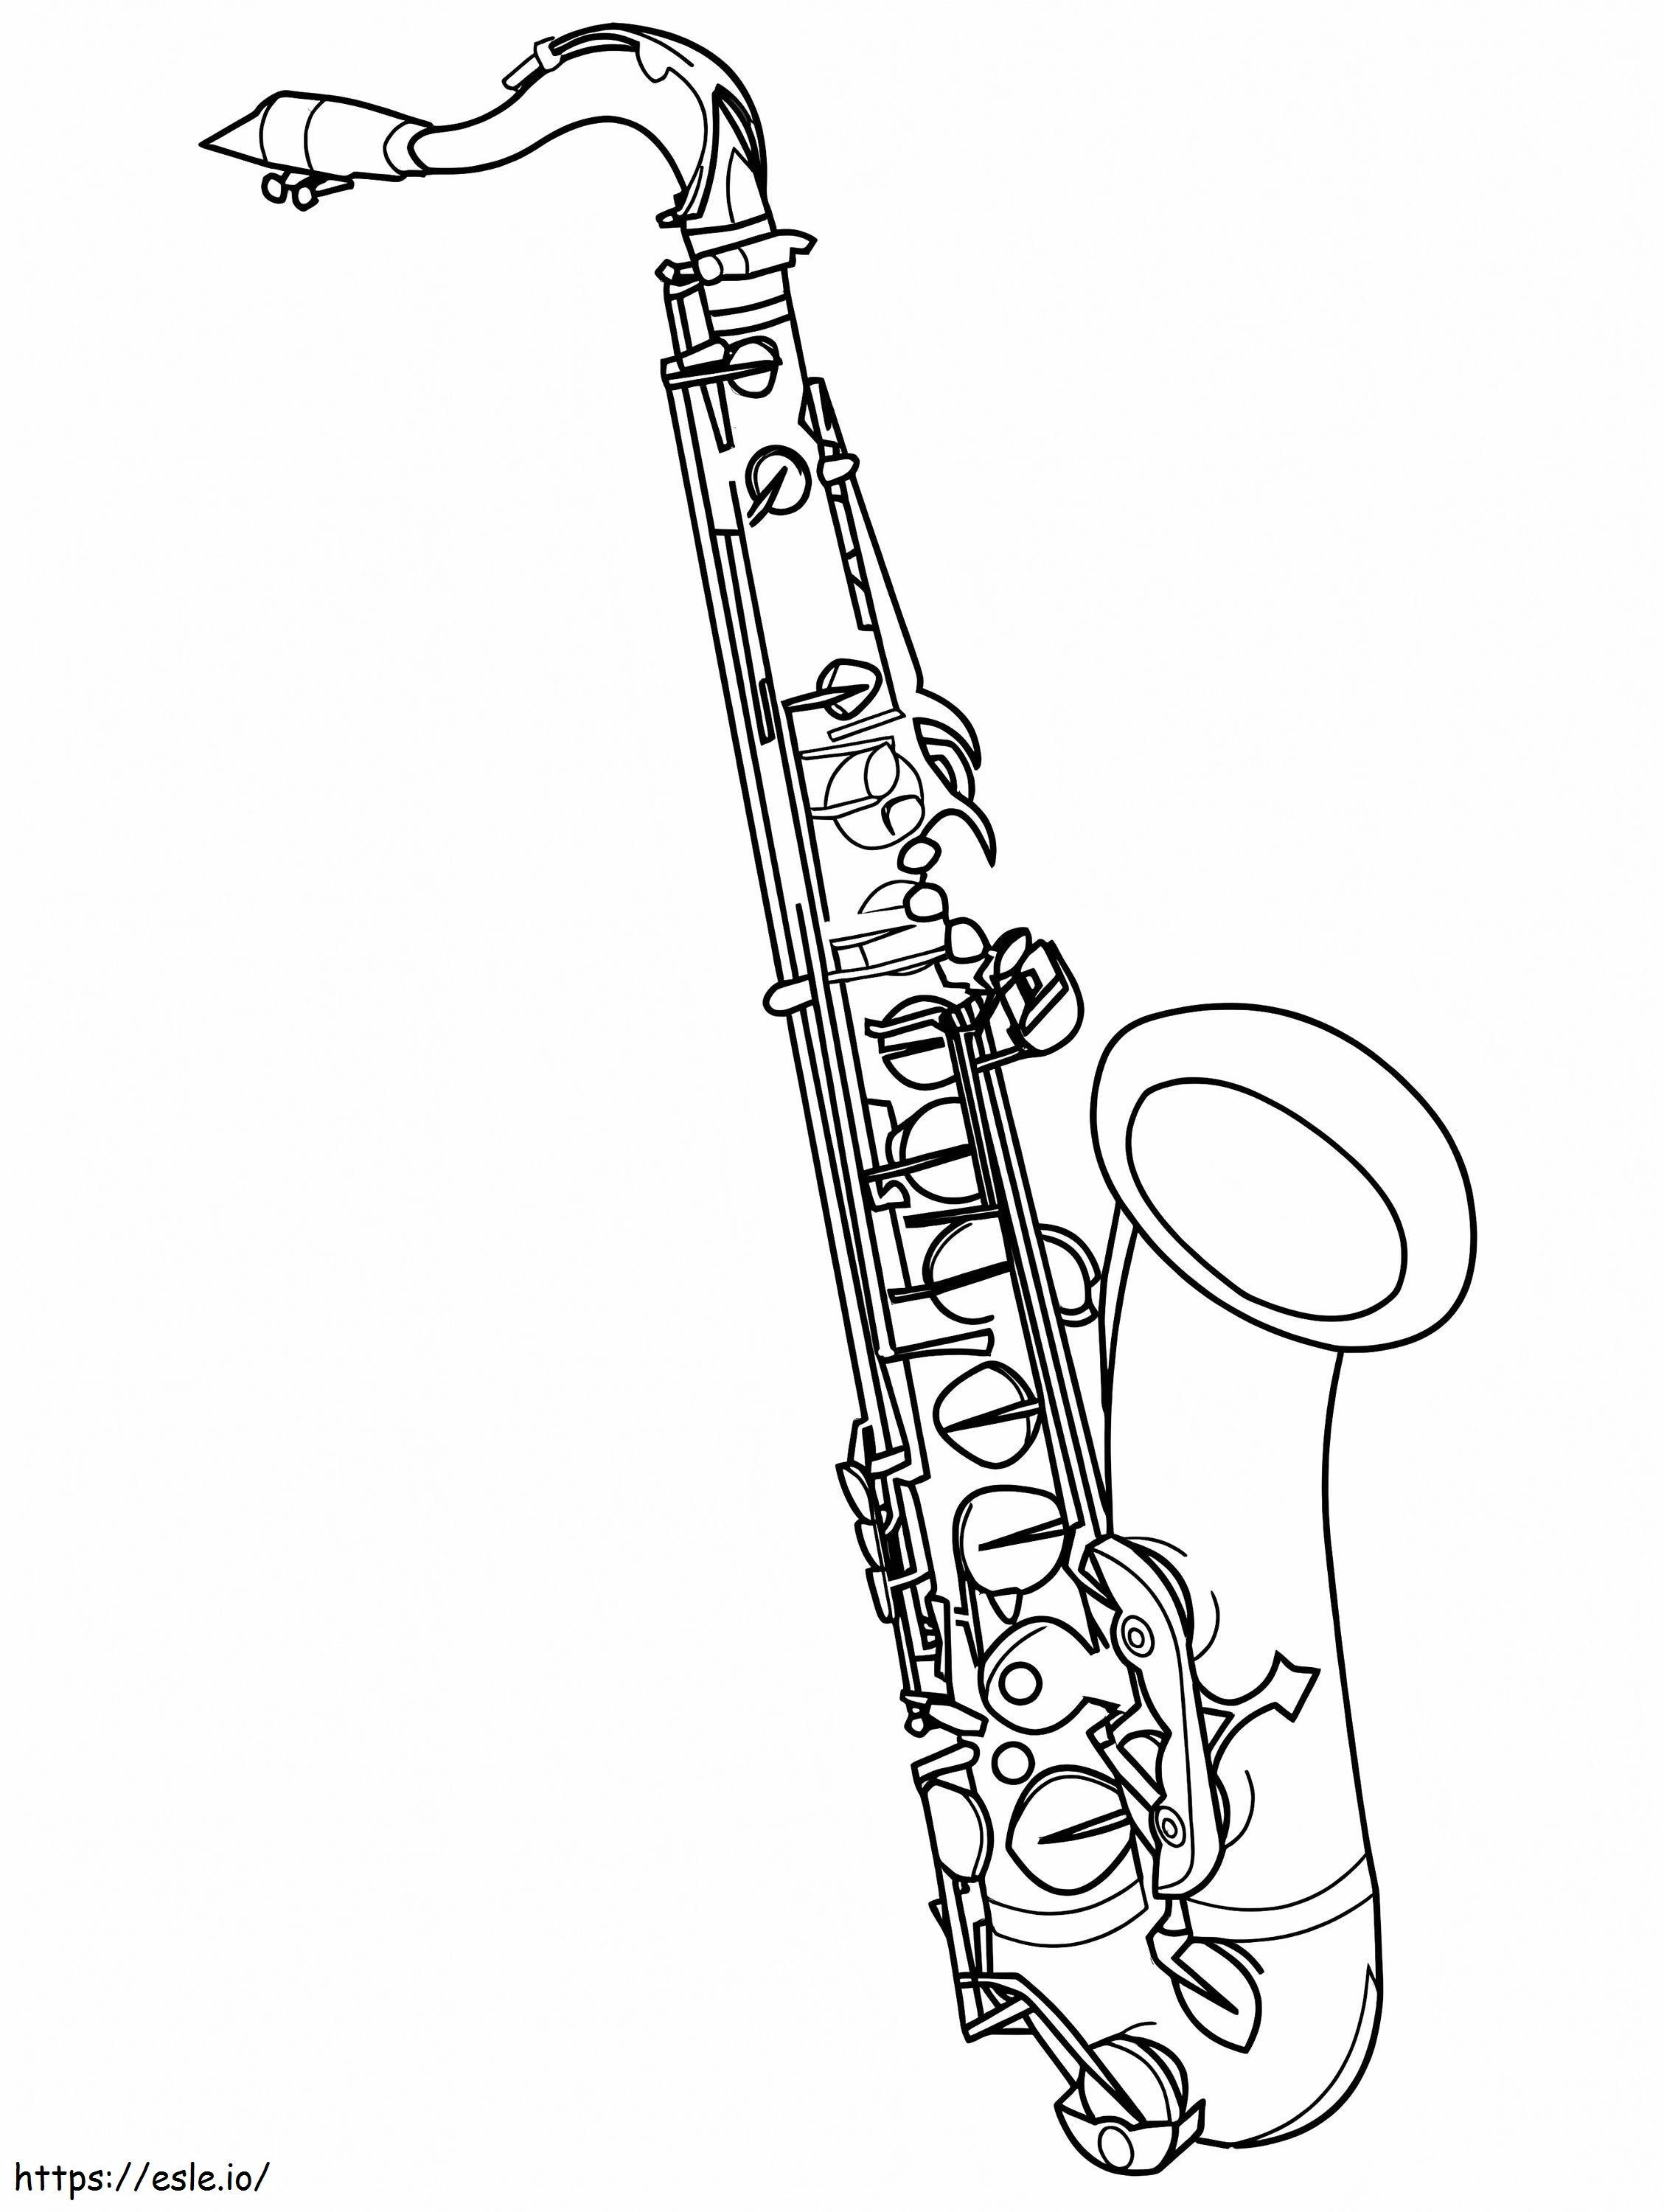 Basic Saxophone 2 coloring page